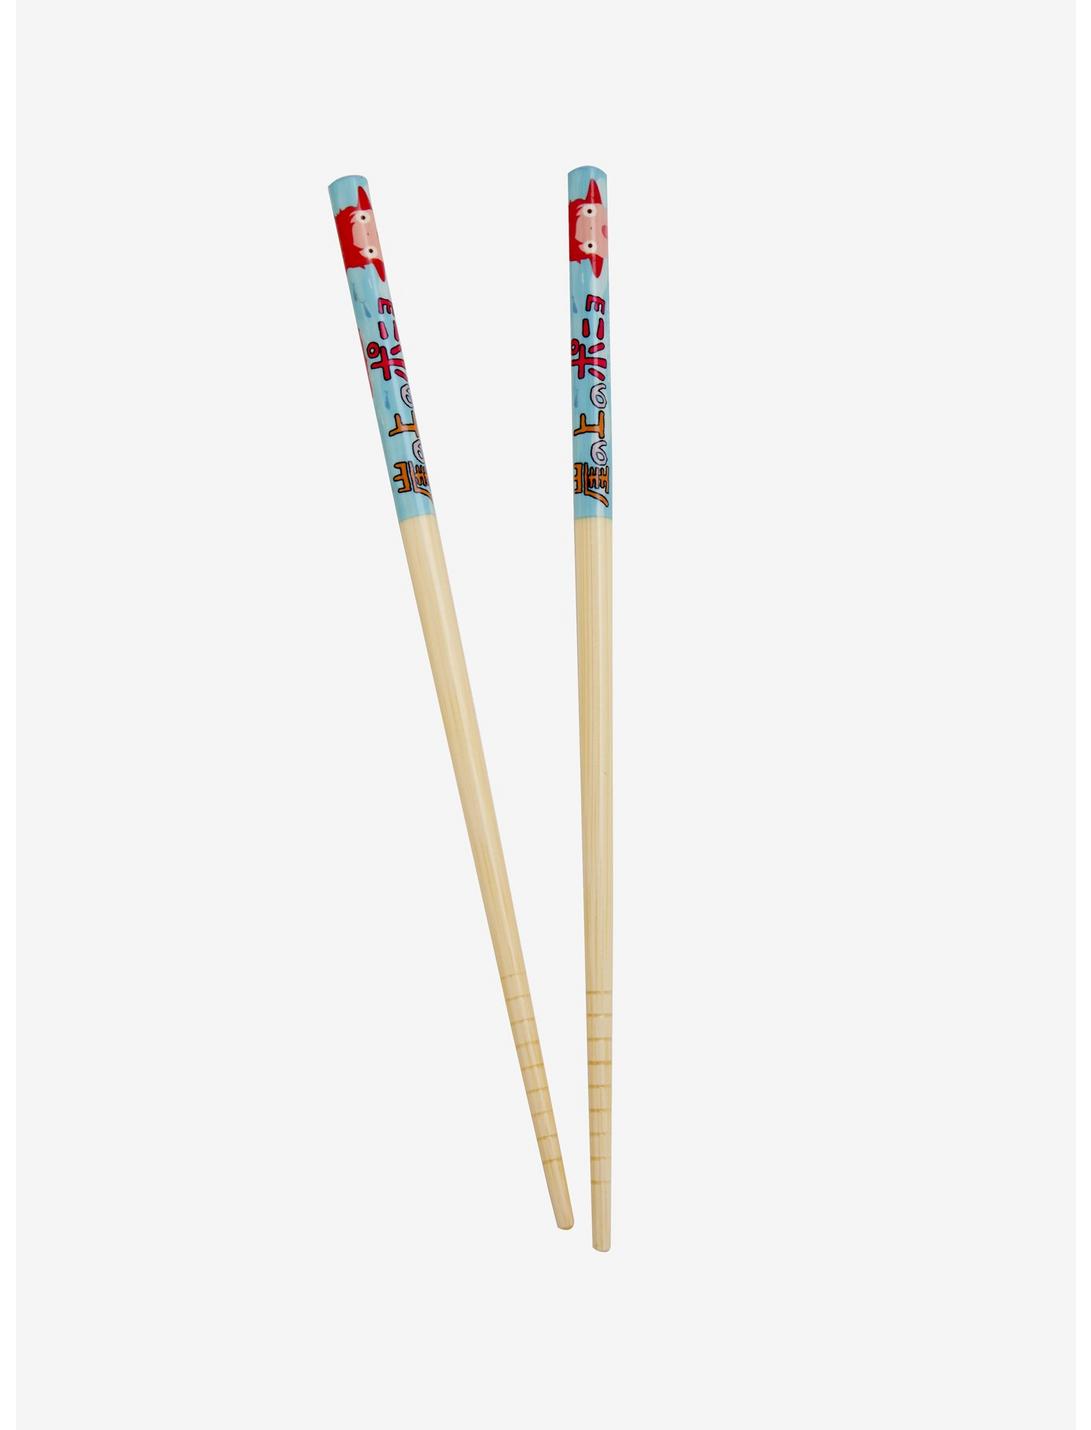 Studio Ghibli Ponyo Bamboo Chopsticks, , hi-res